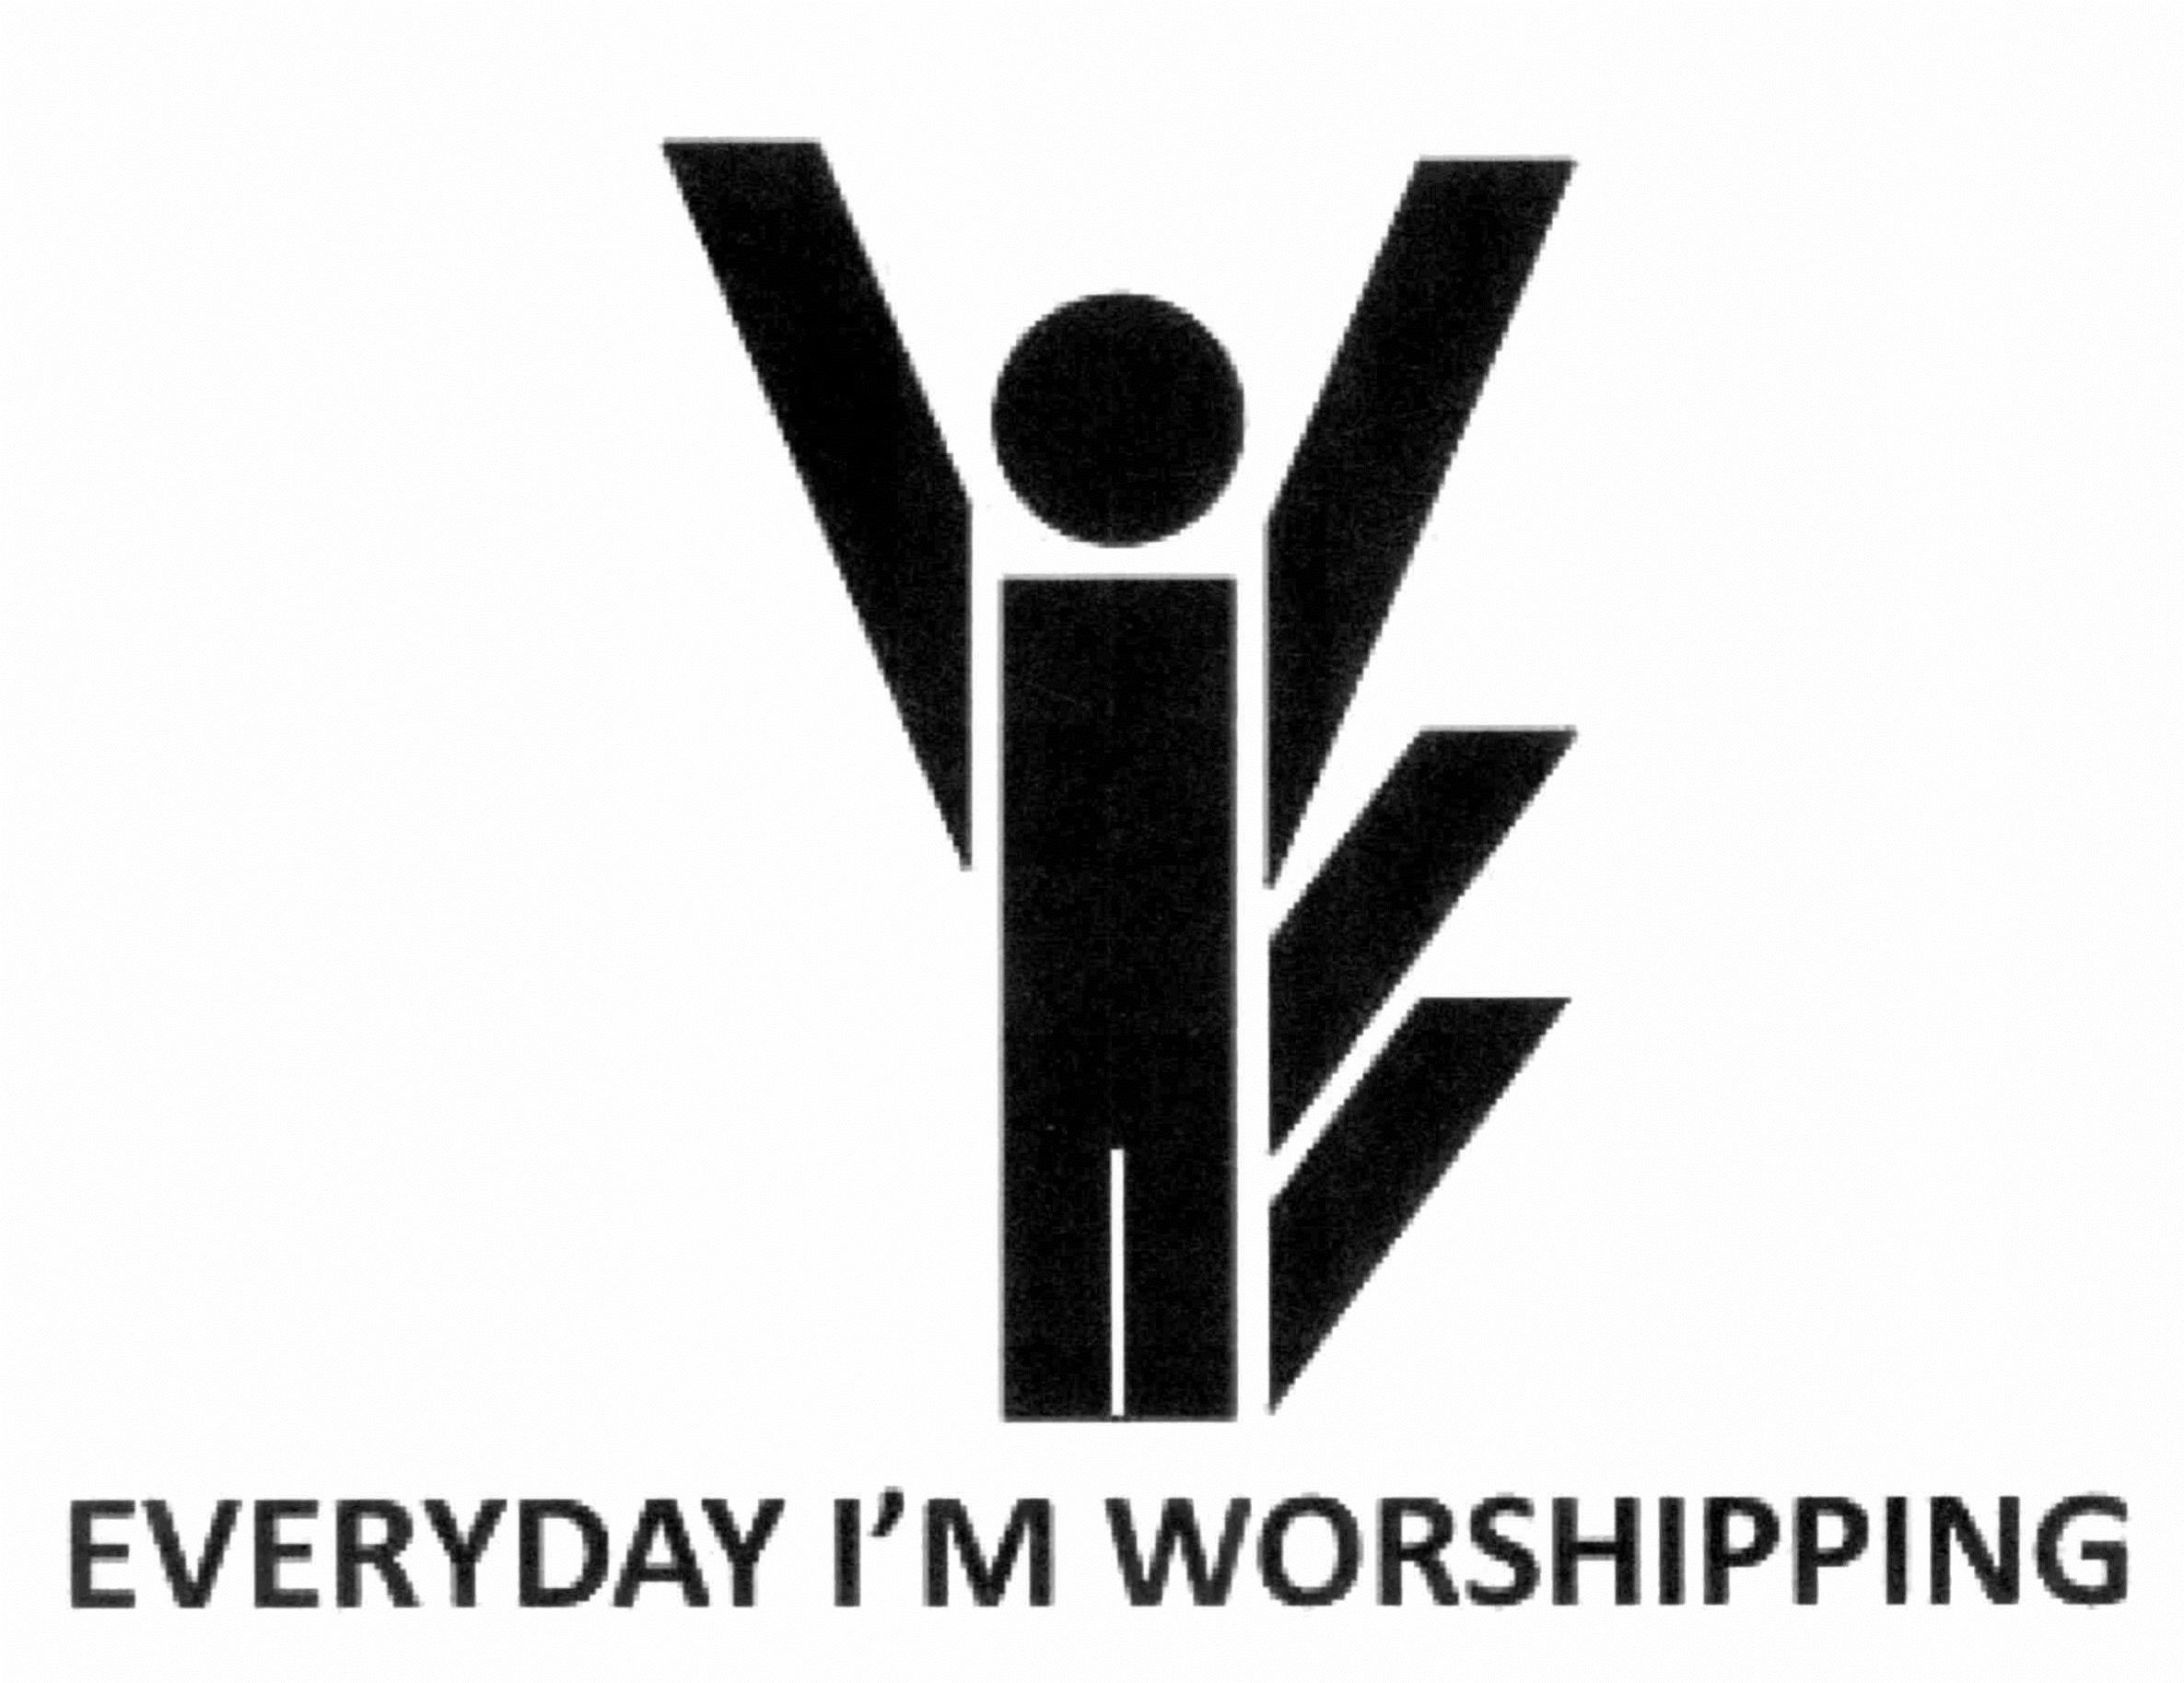  IE EVERYDAY I'M WORSHIPPING